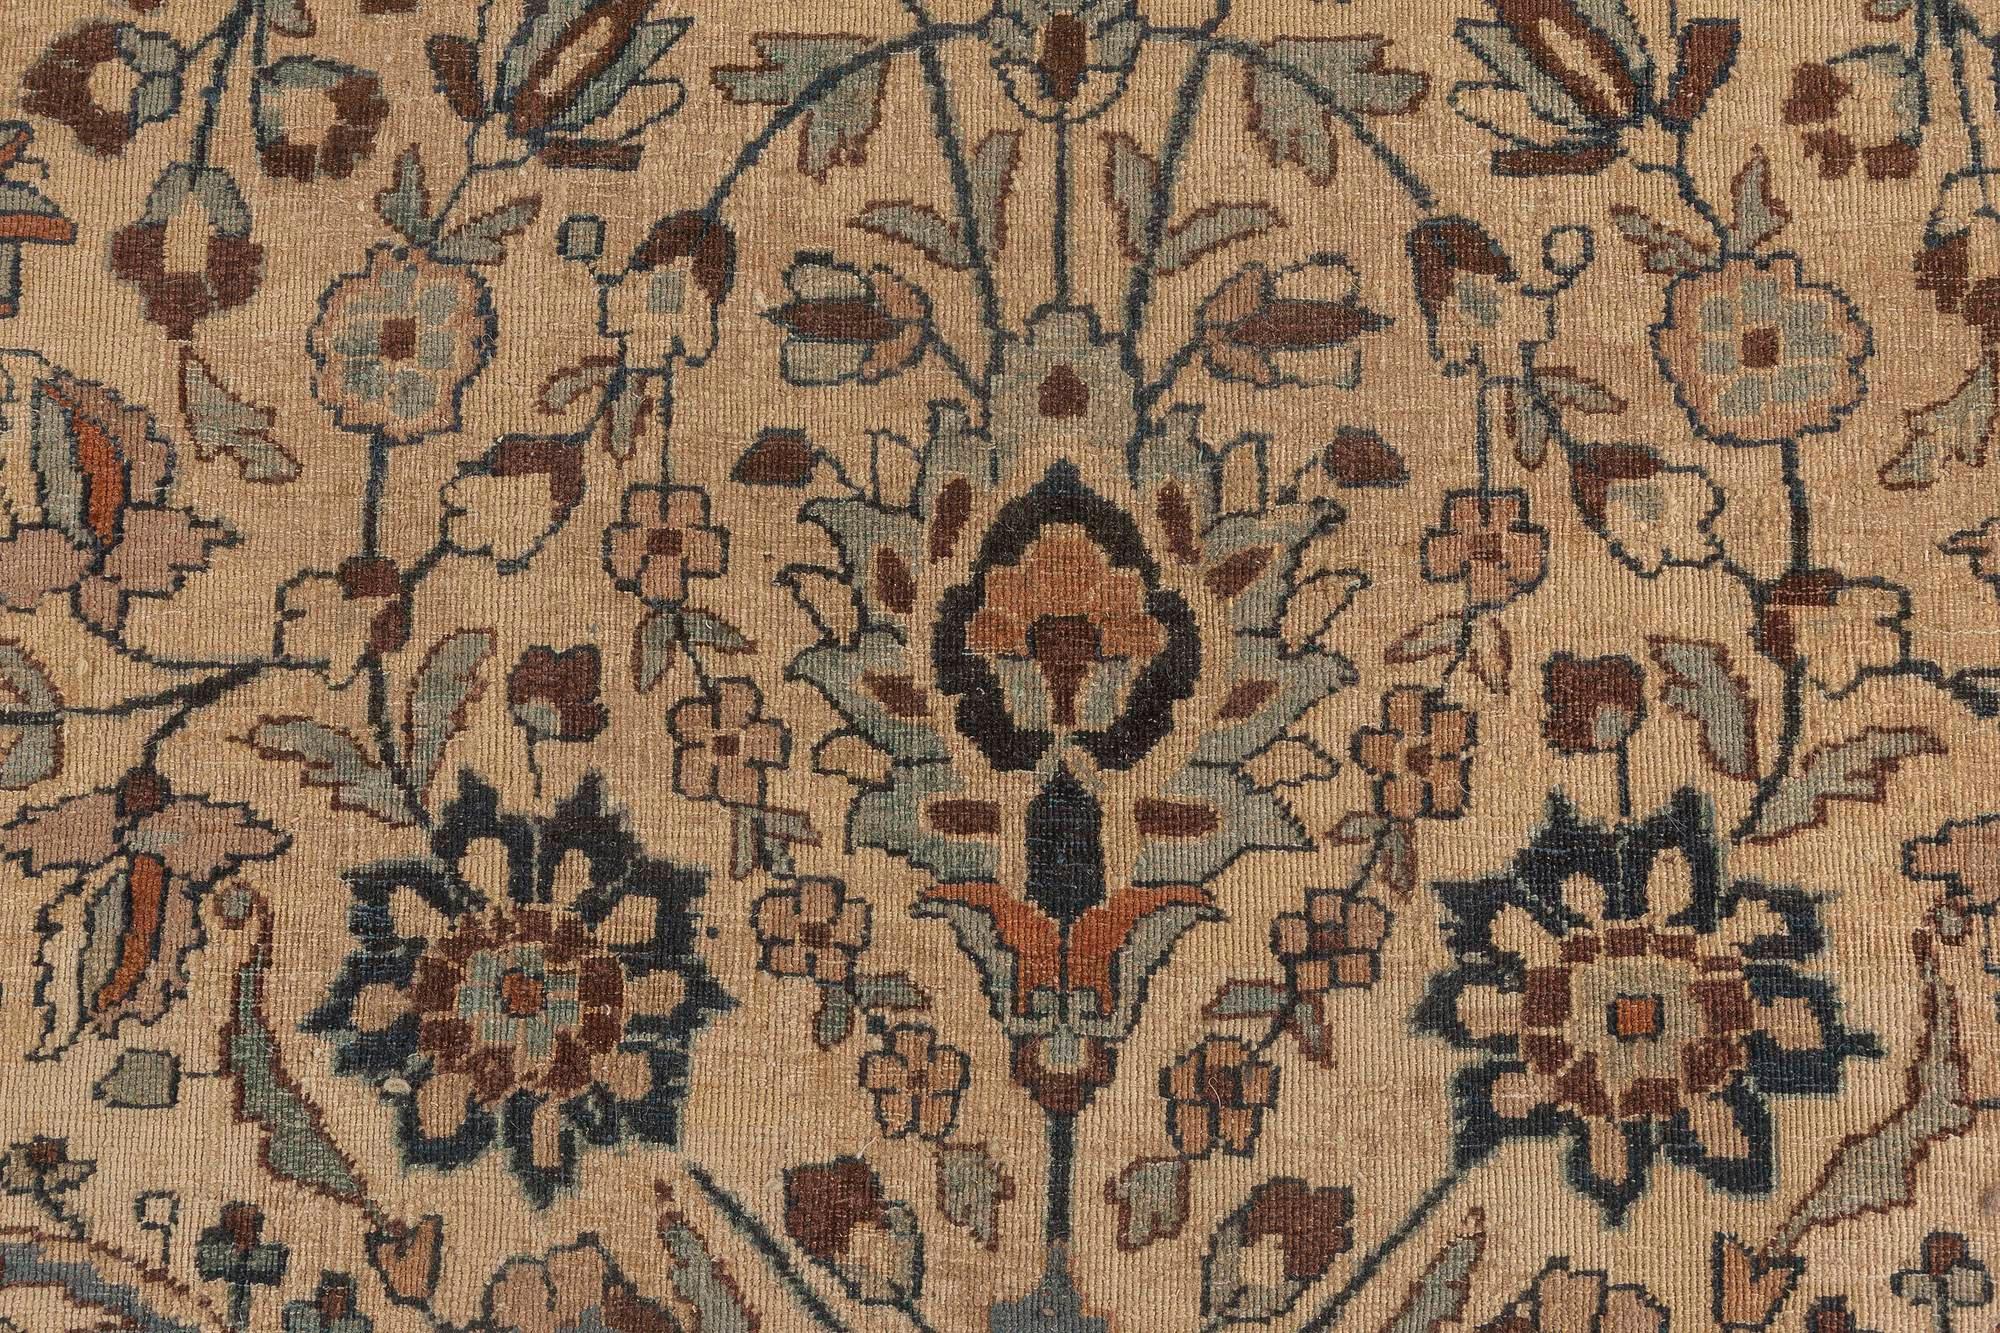 Oversized 19th century Persian Meshad rug
Size: 15'10